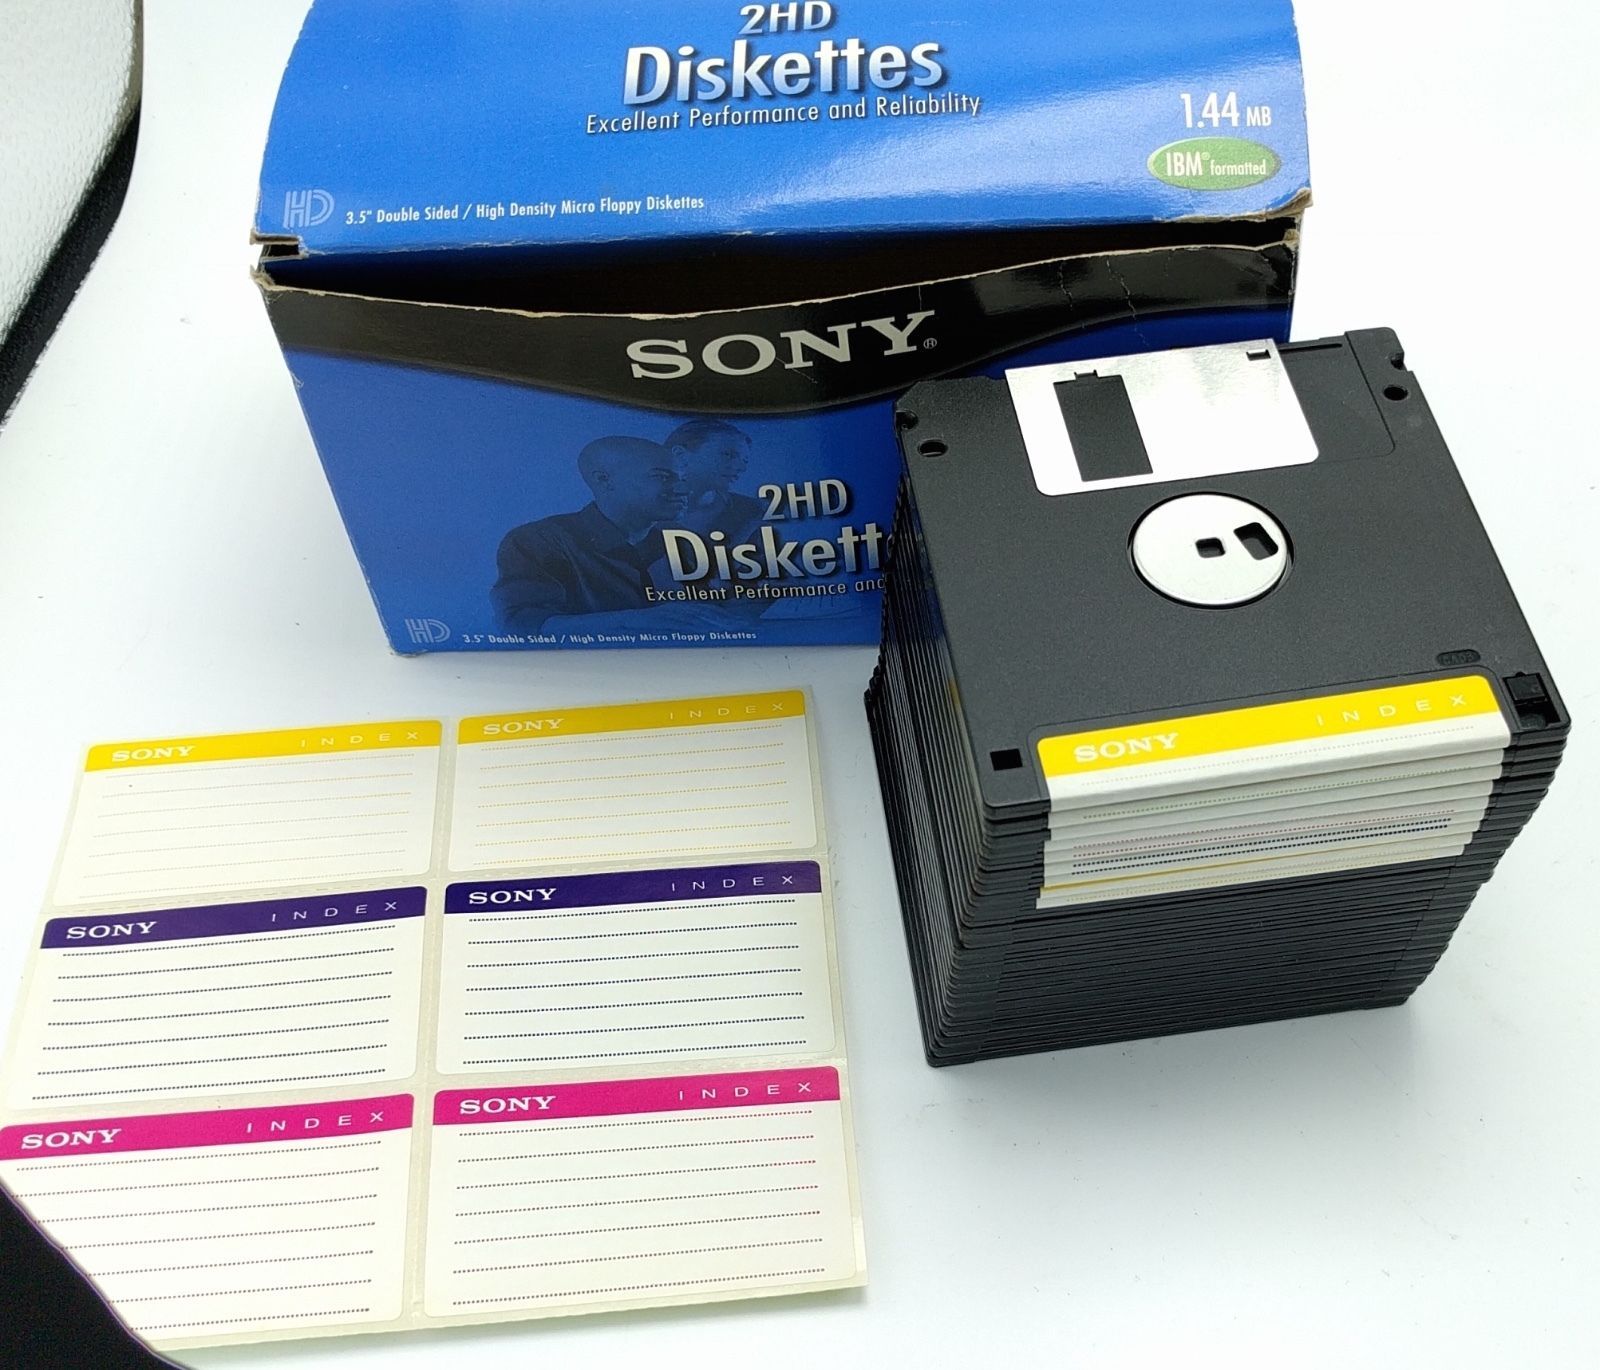 ibm formatted floppy disks